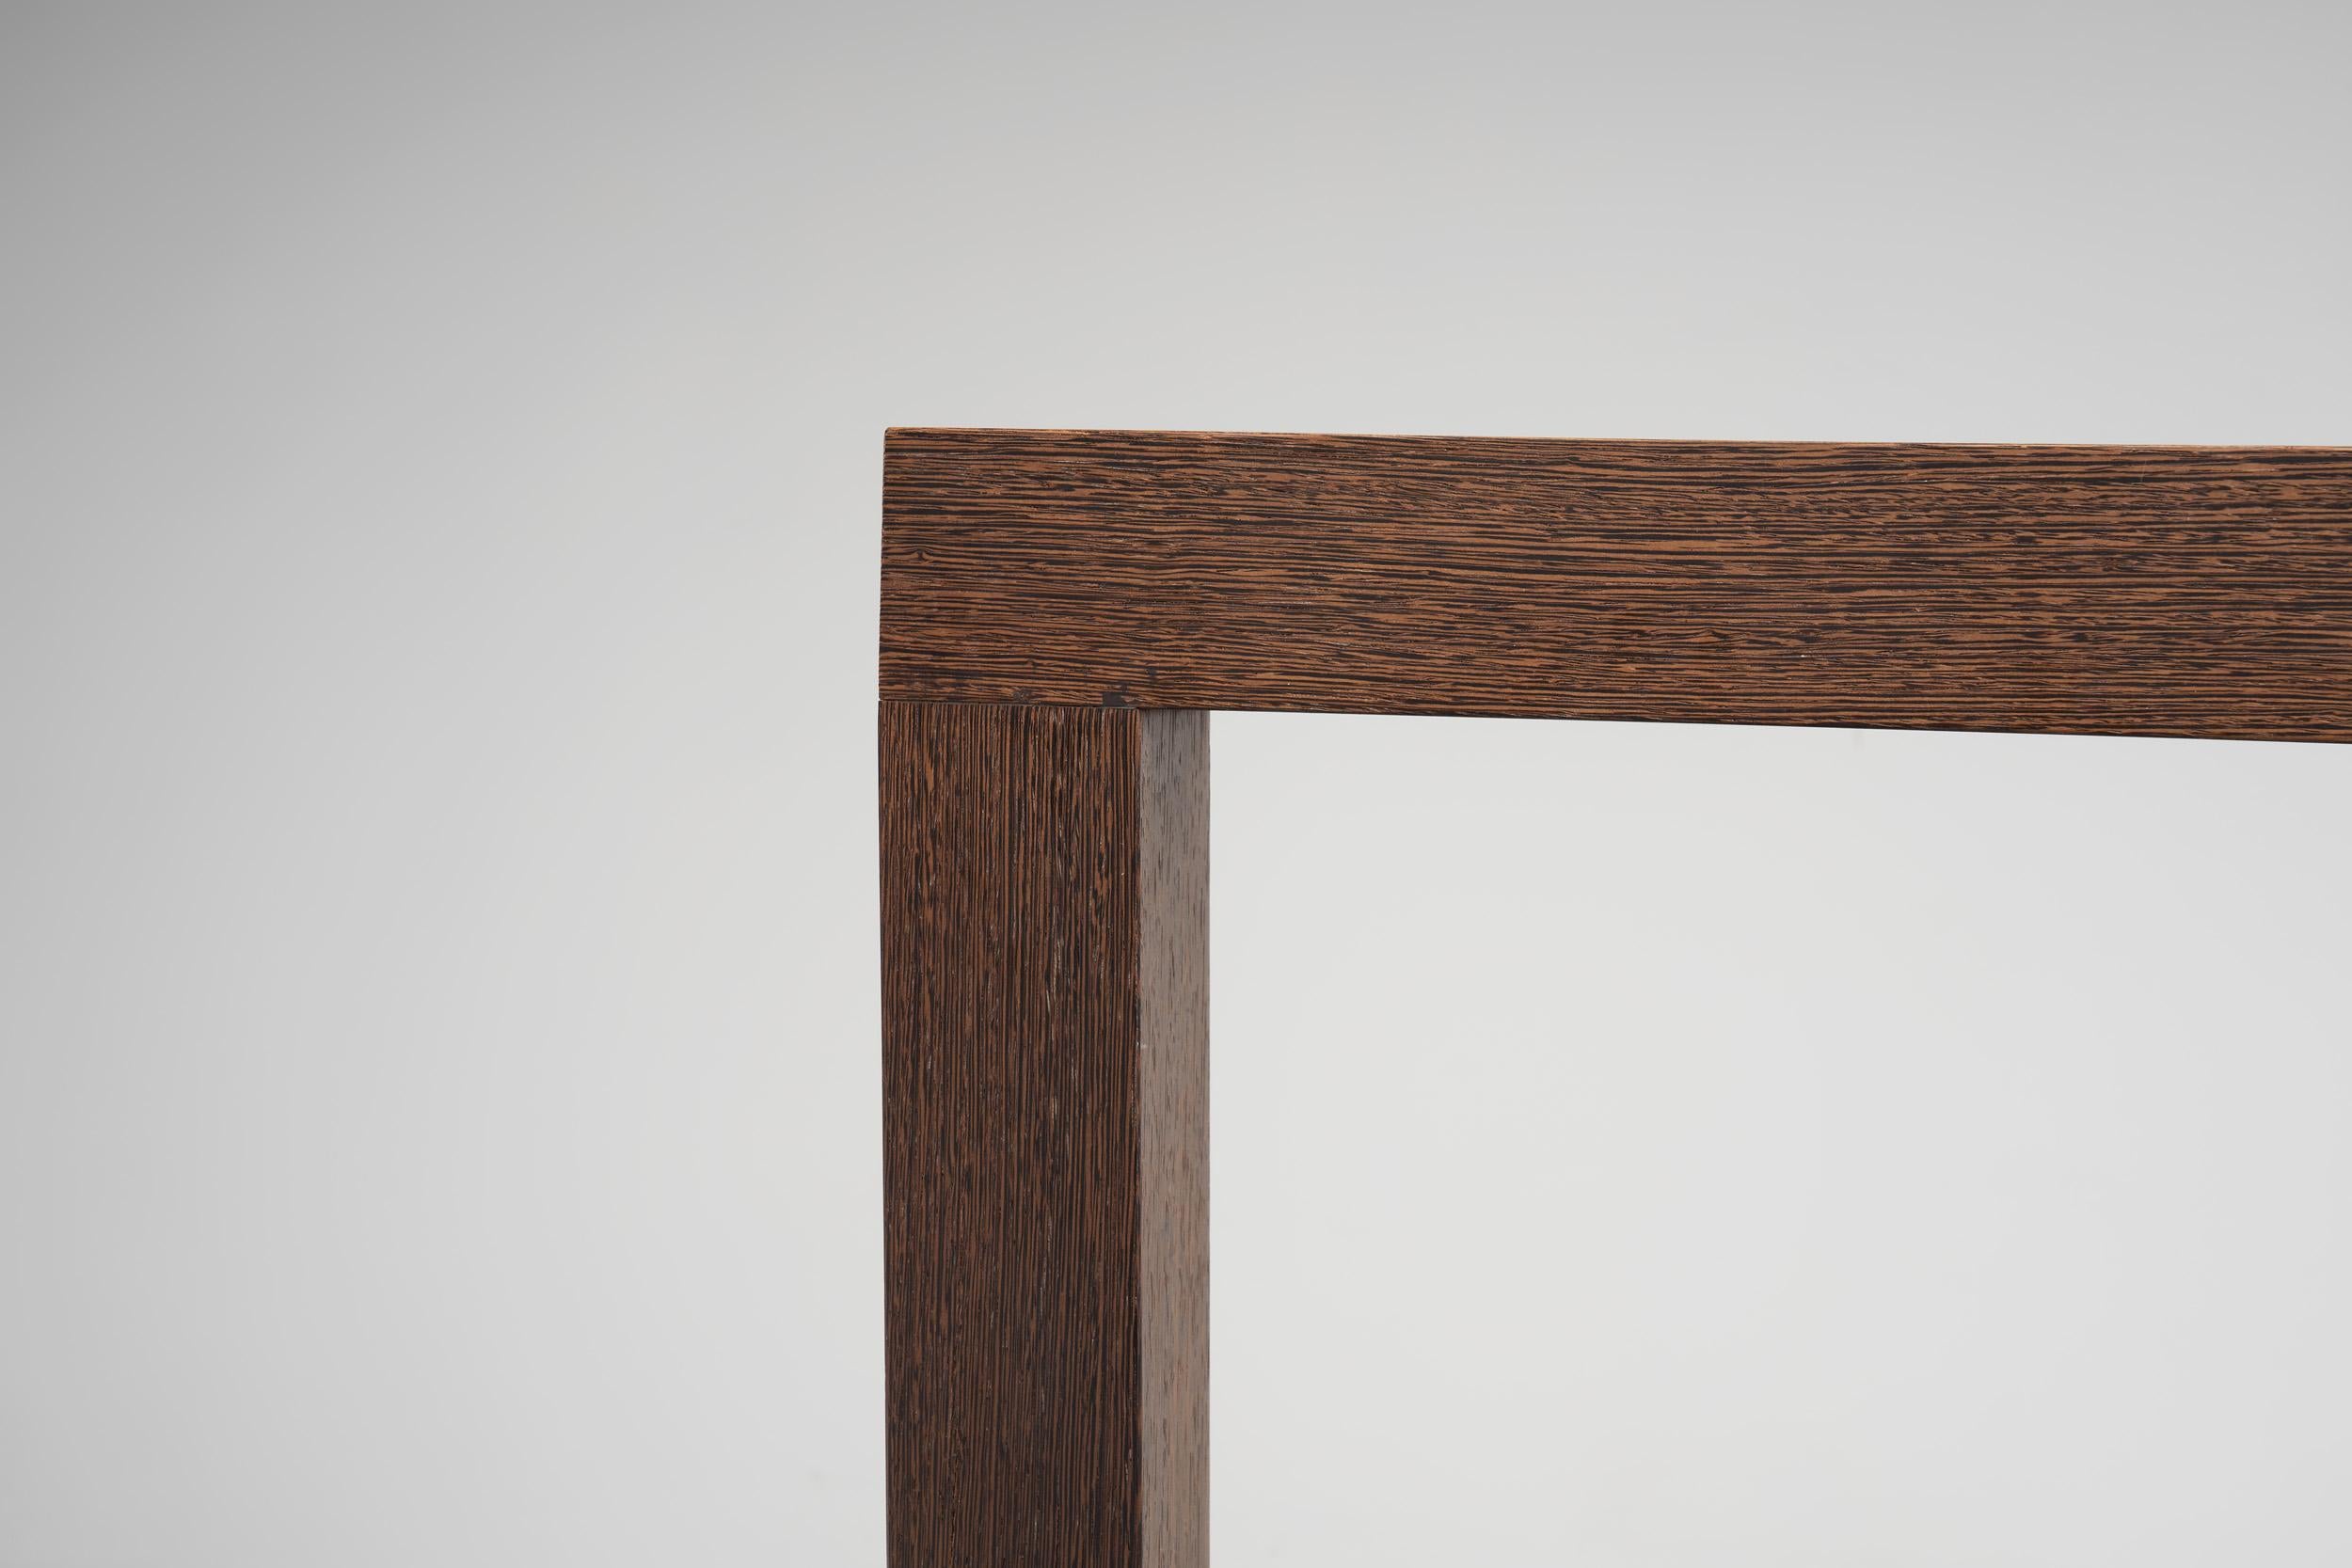 Wood Giorgio Armani Chestnut Constructivist Side Chairs, Italy, 1990s For Sale